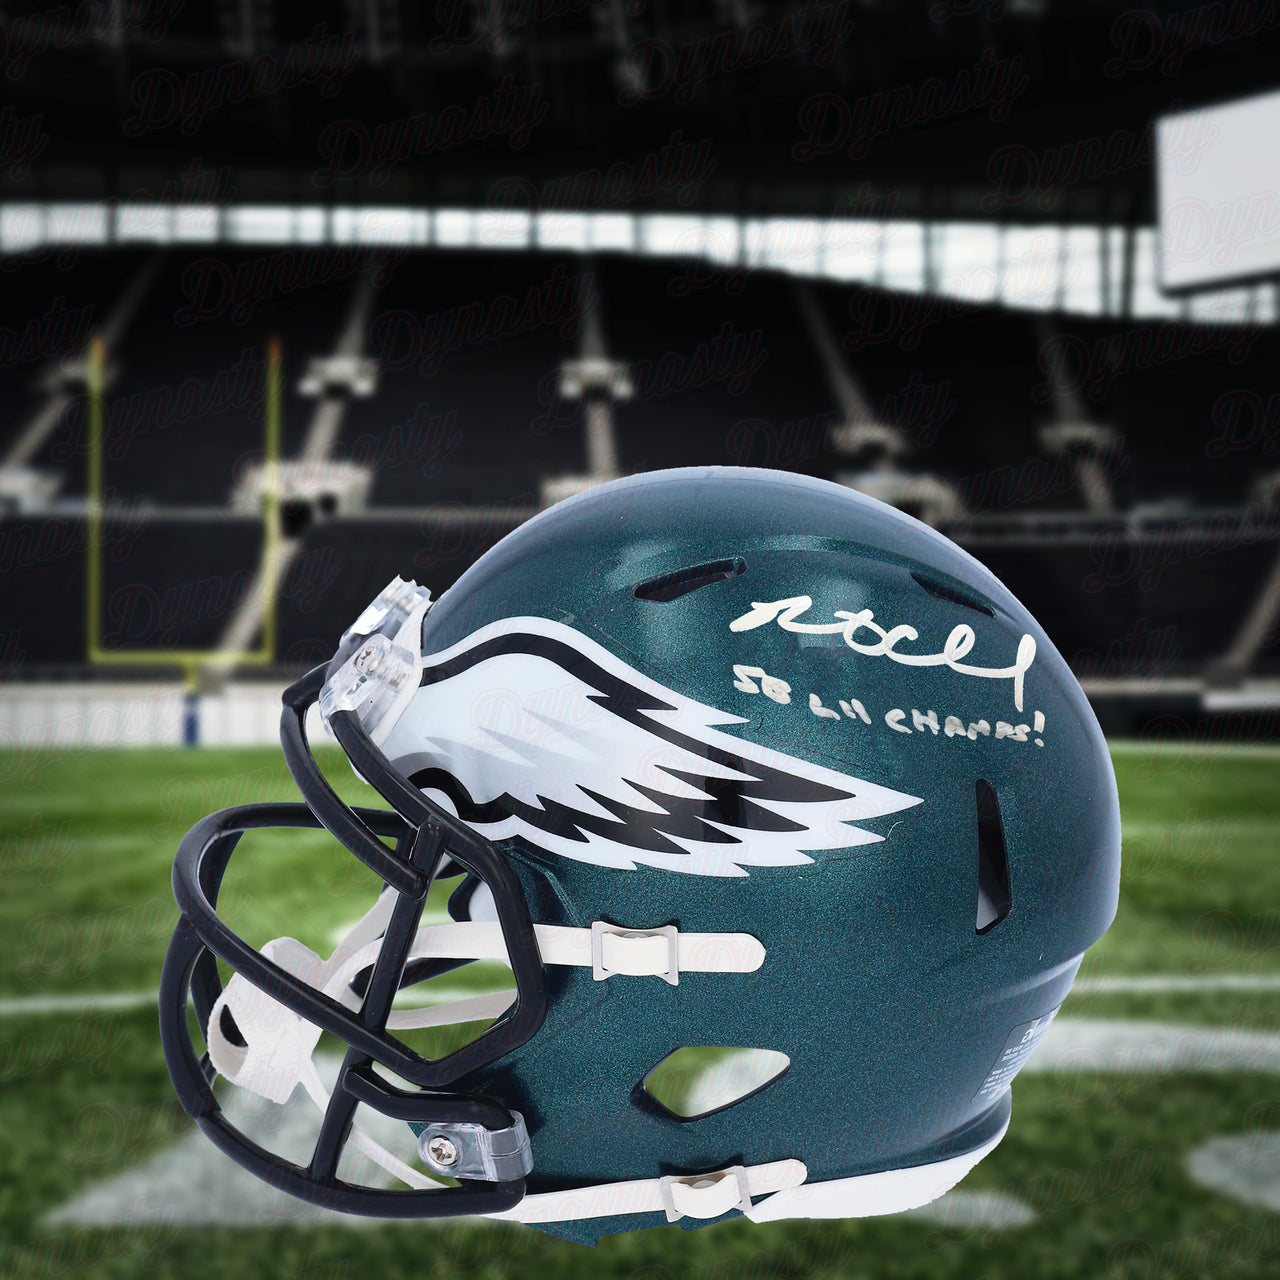 Brent Celek Philadelphia Eagles Autographed Football Mini-Helmet w/ Super Bowl Champions Inscription - Dynasty Sports & Framing 